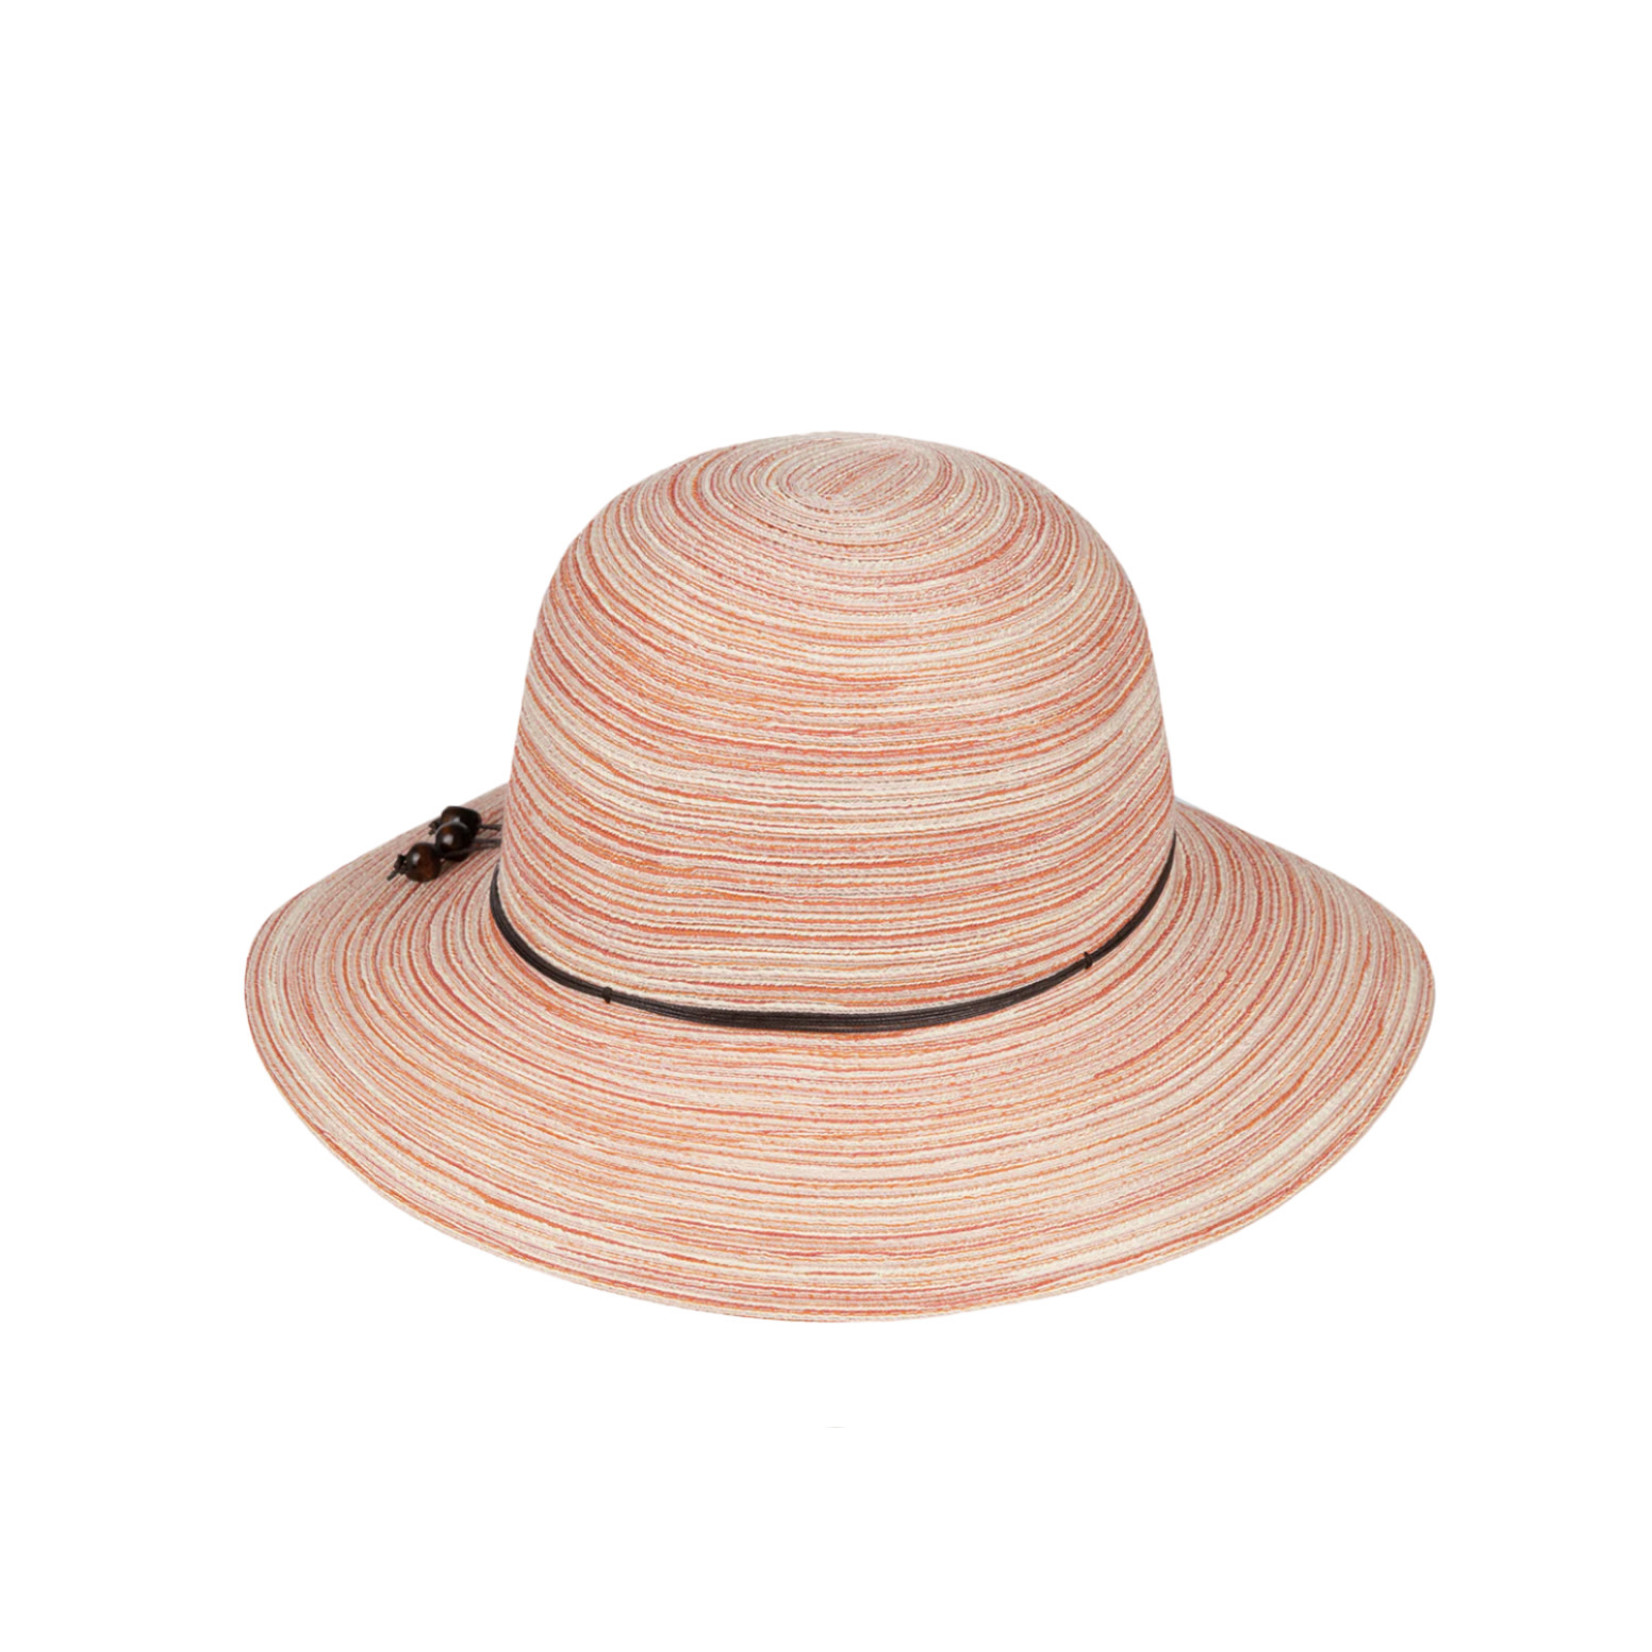 Kooringal Sophia Short Brim Hat in Sunset Coral